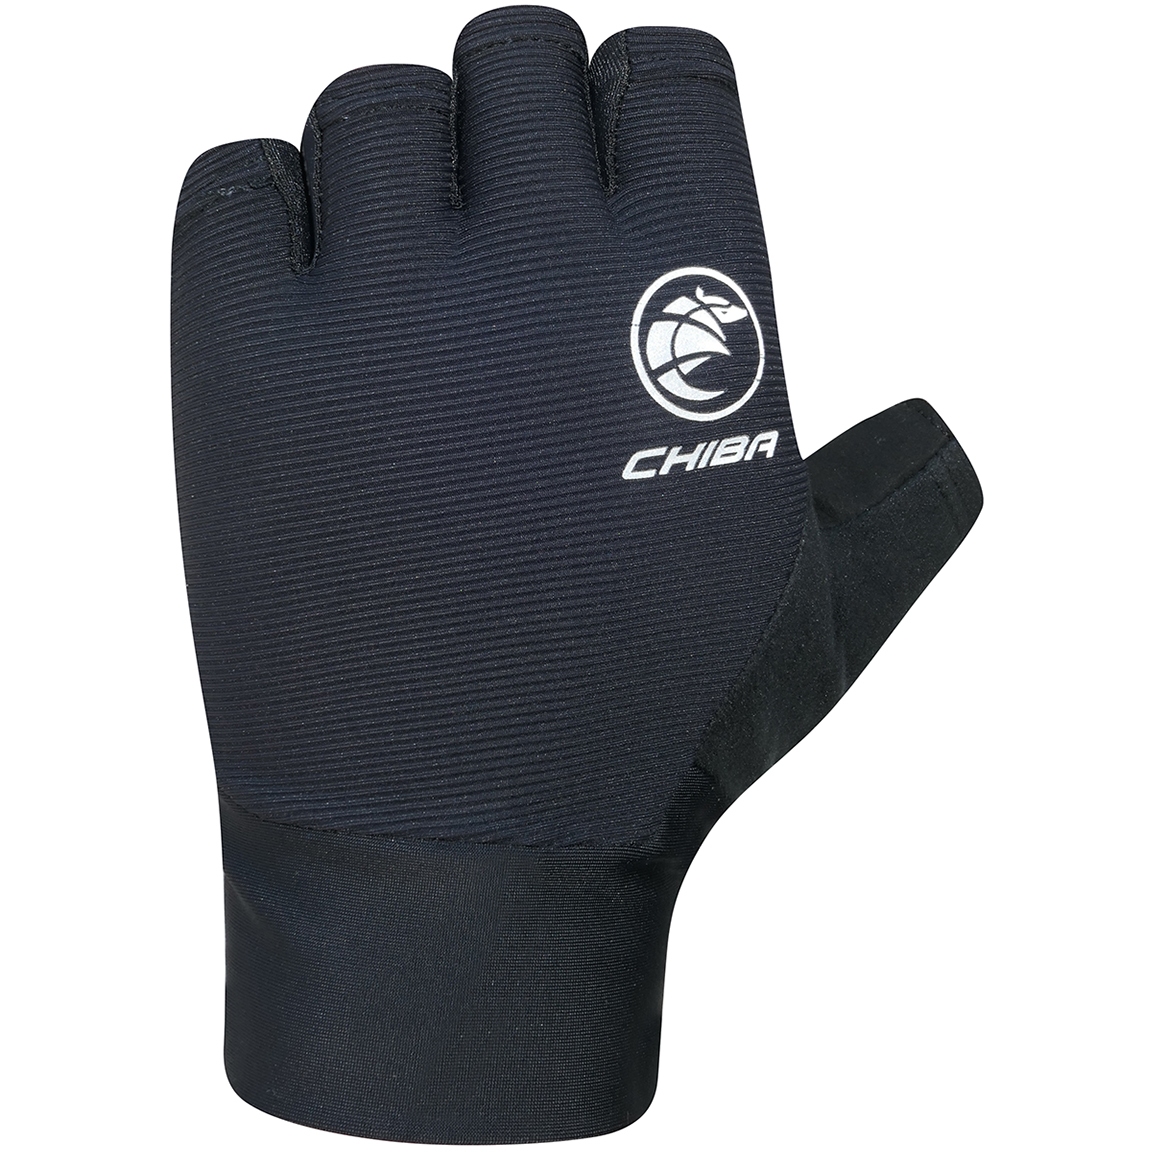 Picture of Chiba Team Pro Bike Gloves - black